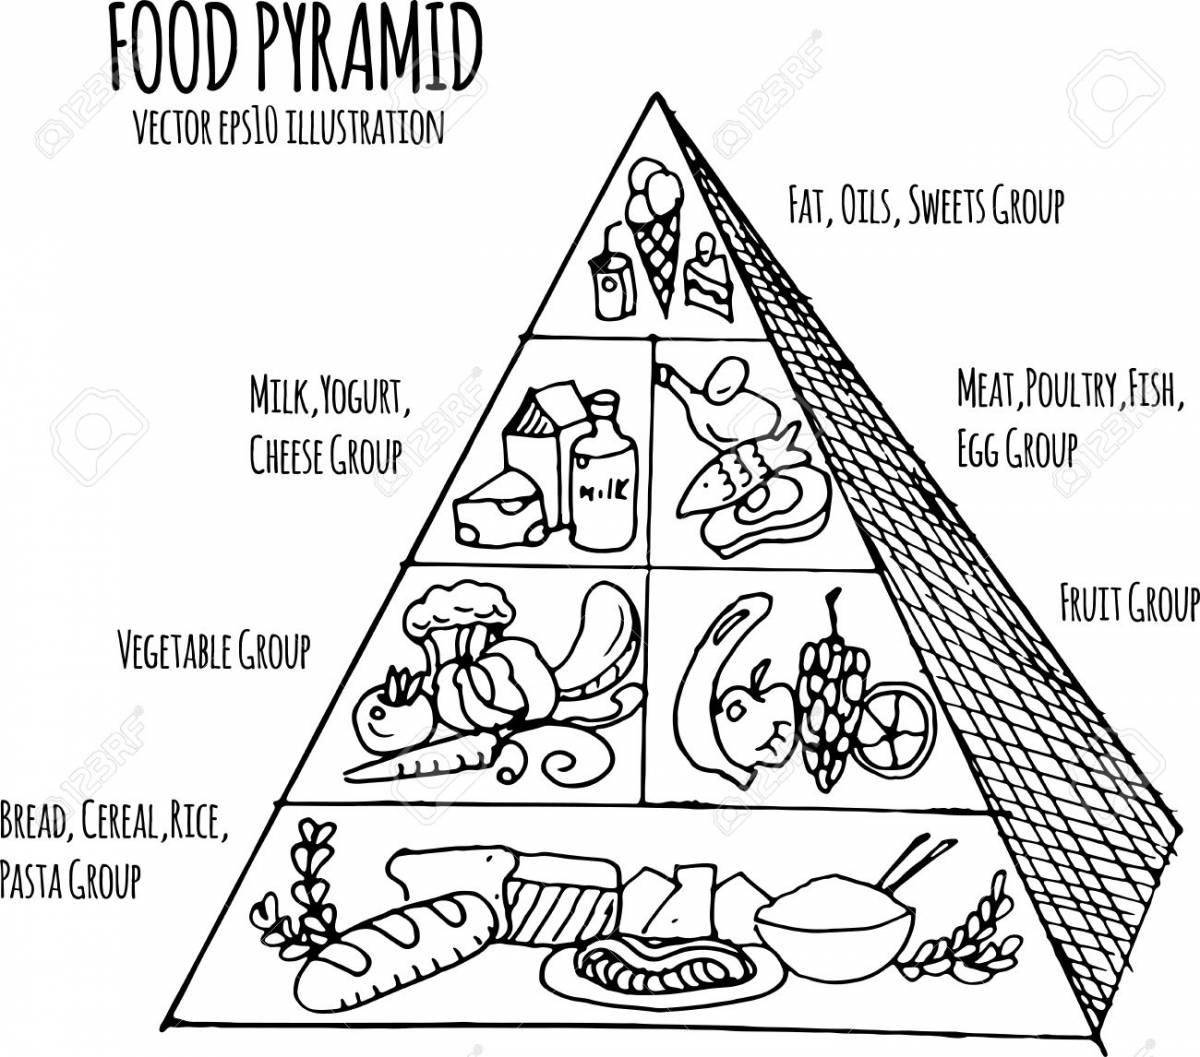 Food pyramid #12